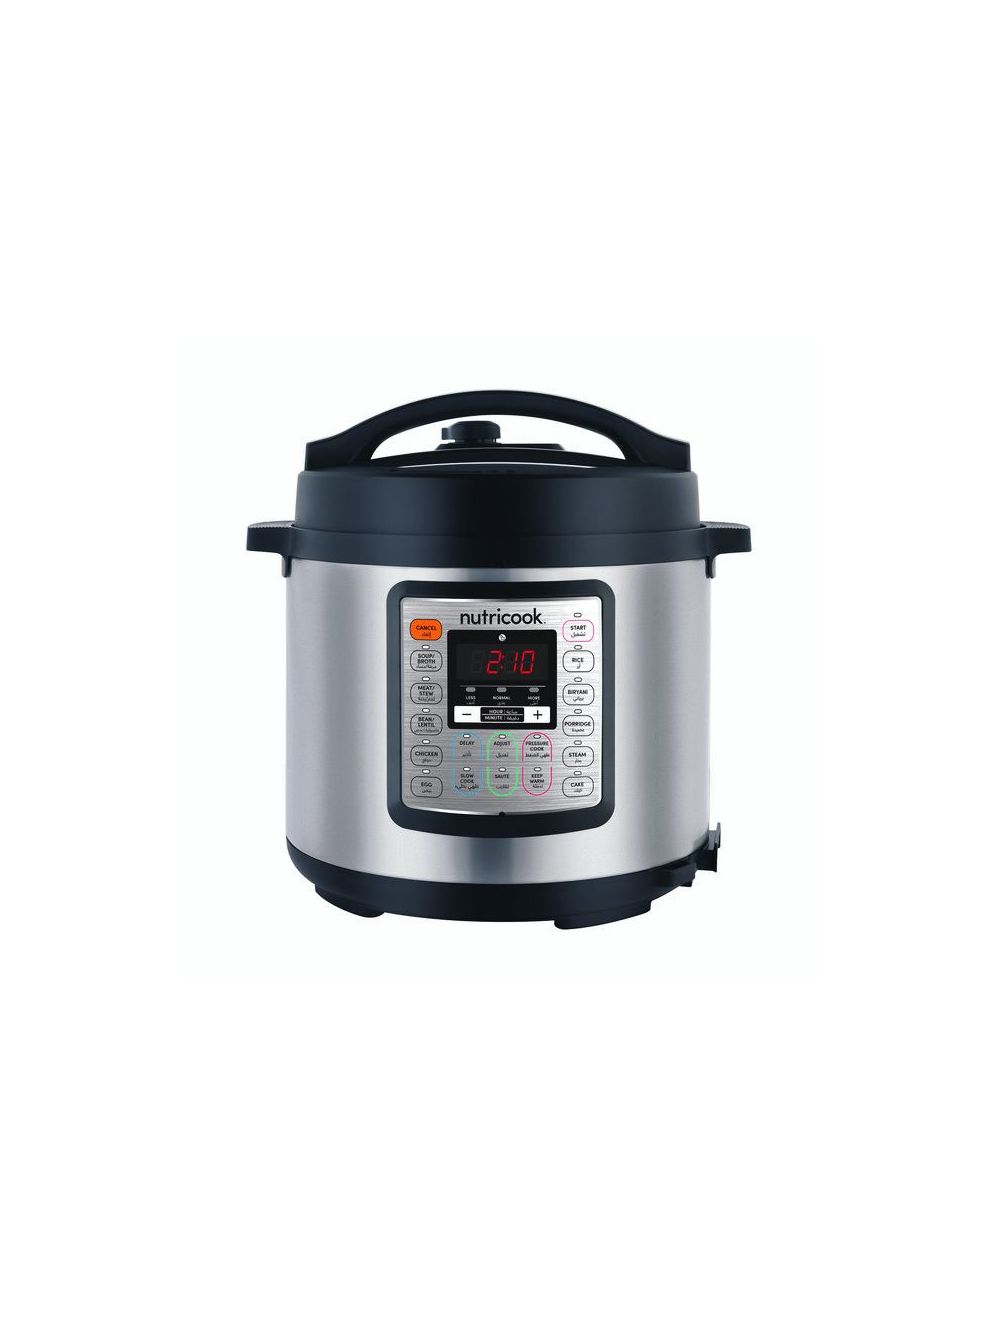 Nutricook Smart Pot Eko 9-in-1 Electric Pressure Cooker 6 L, 1000 Watts, Silver/Black-NC-SPEK6